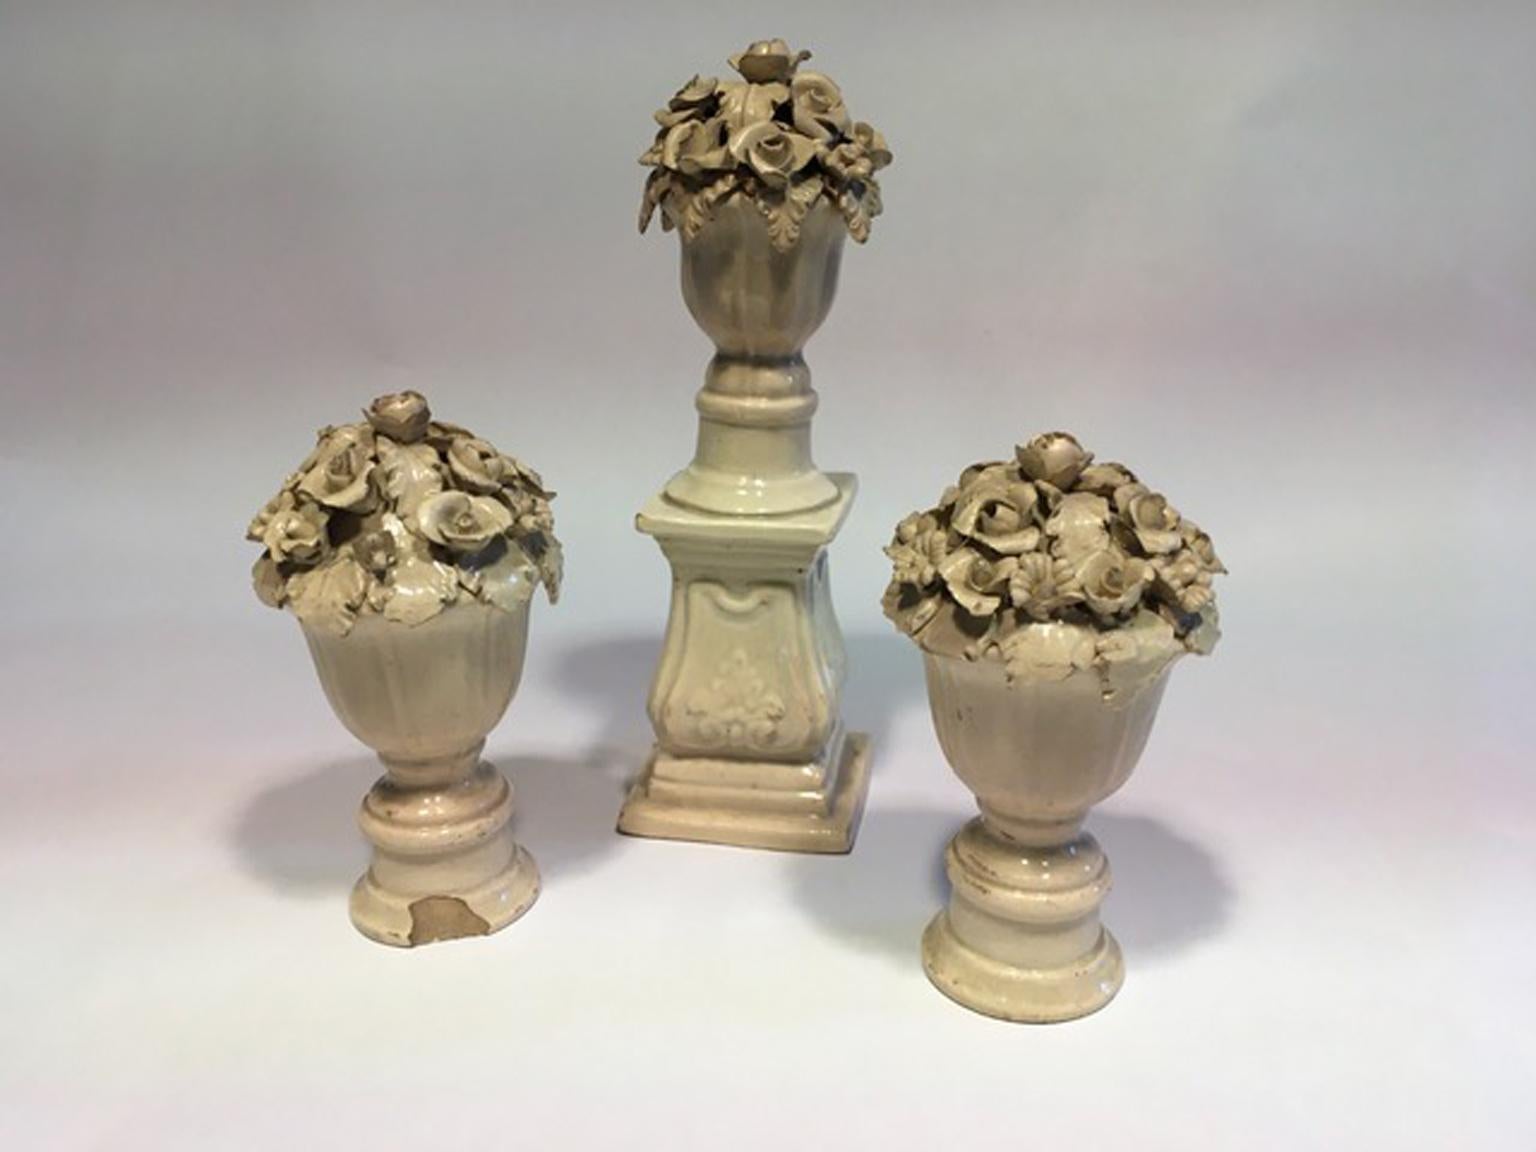 Regency Mid-18th Century Set of 3 White Porcelain Vases with Flowers for Table Decor